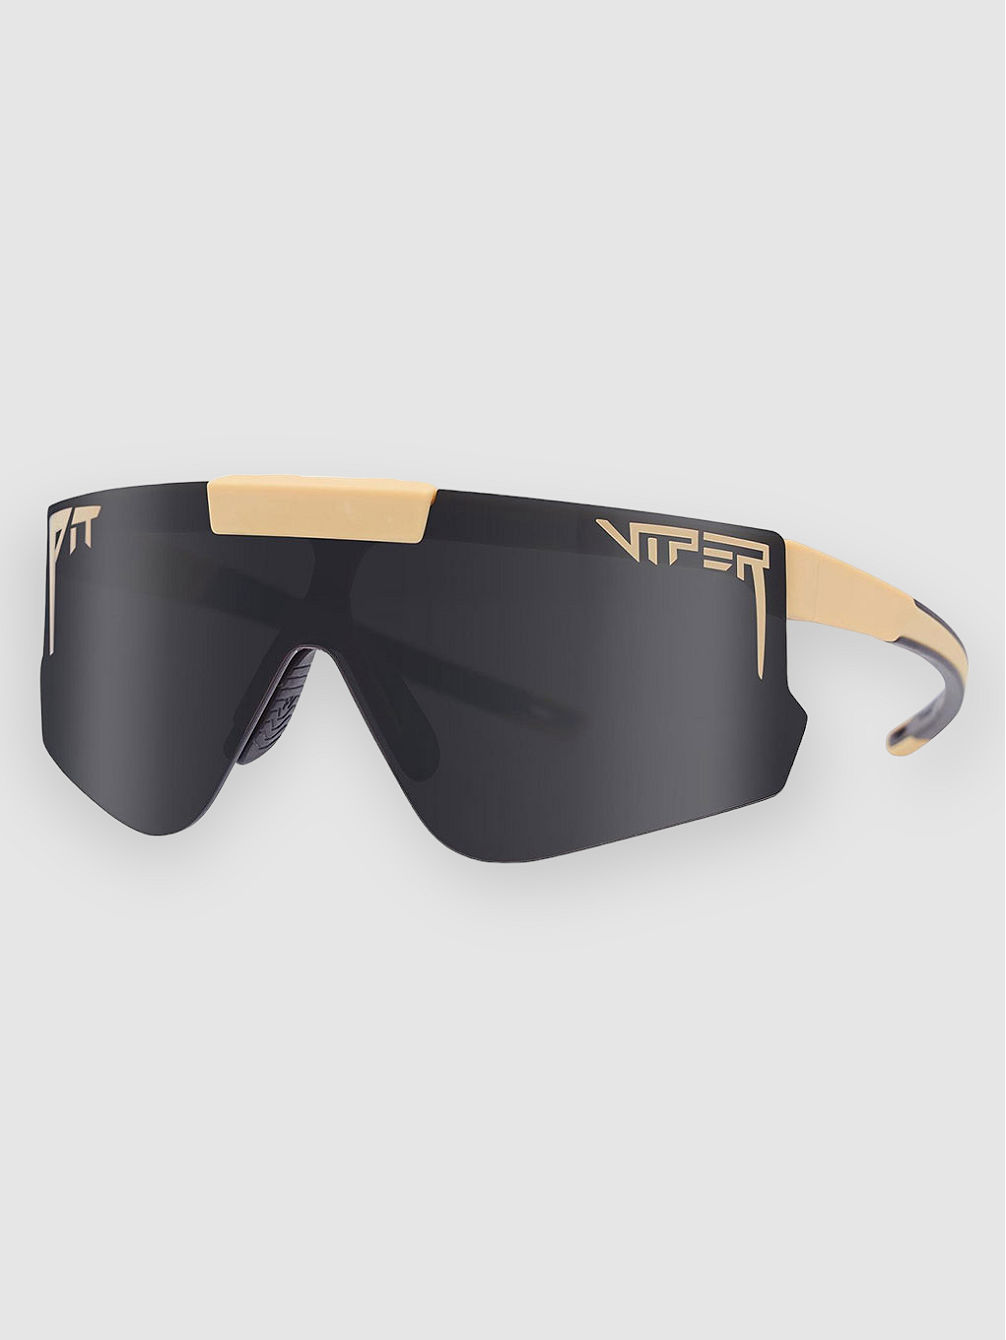 The Flip-Offs Sunglasses